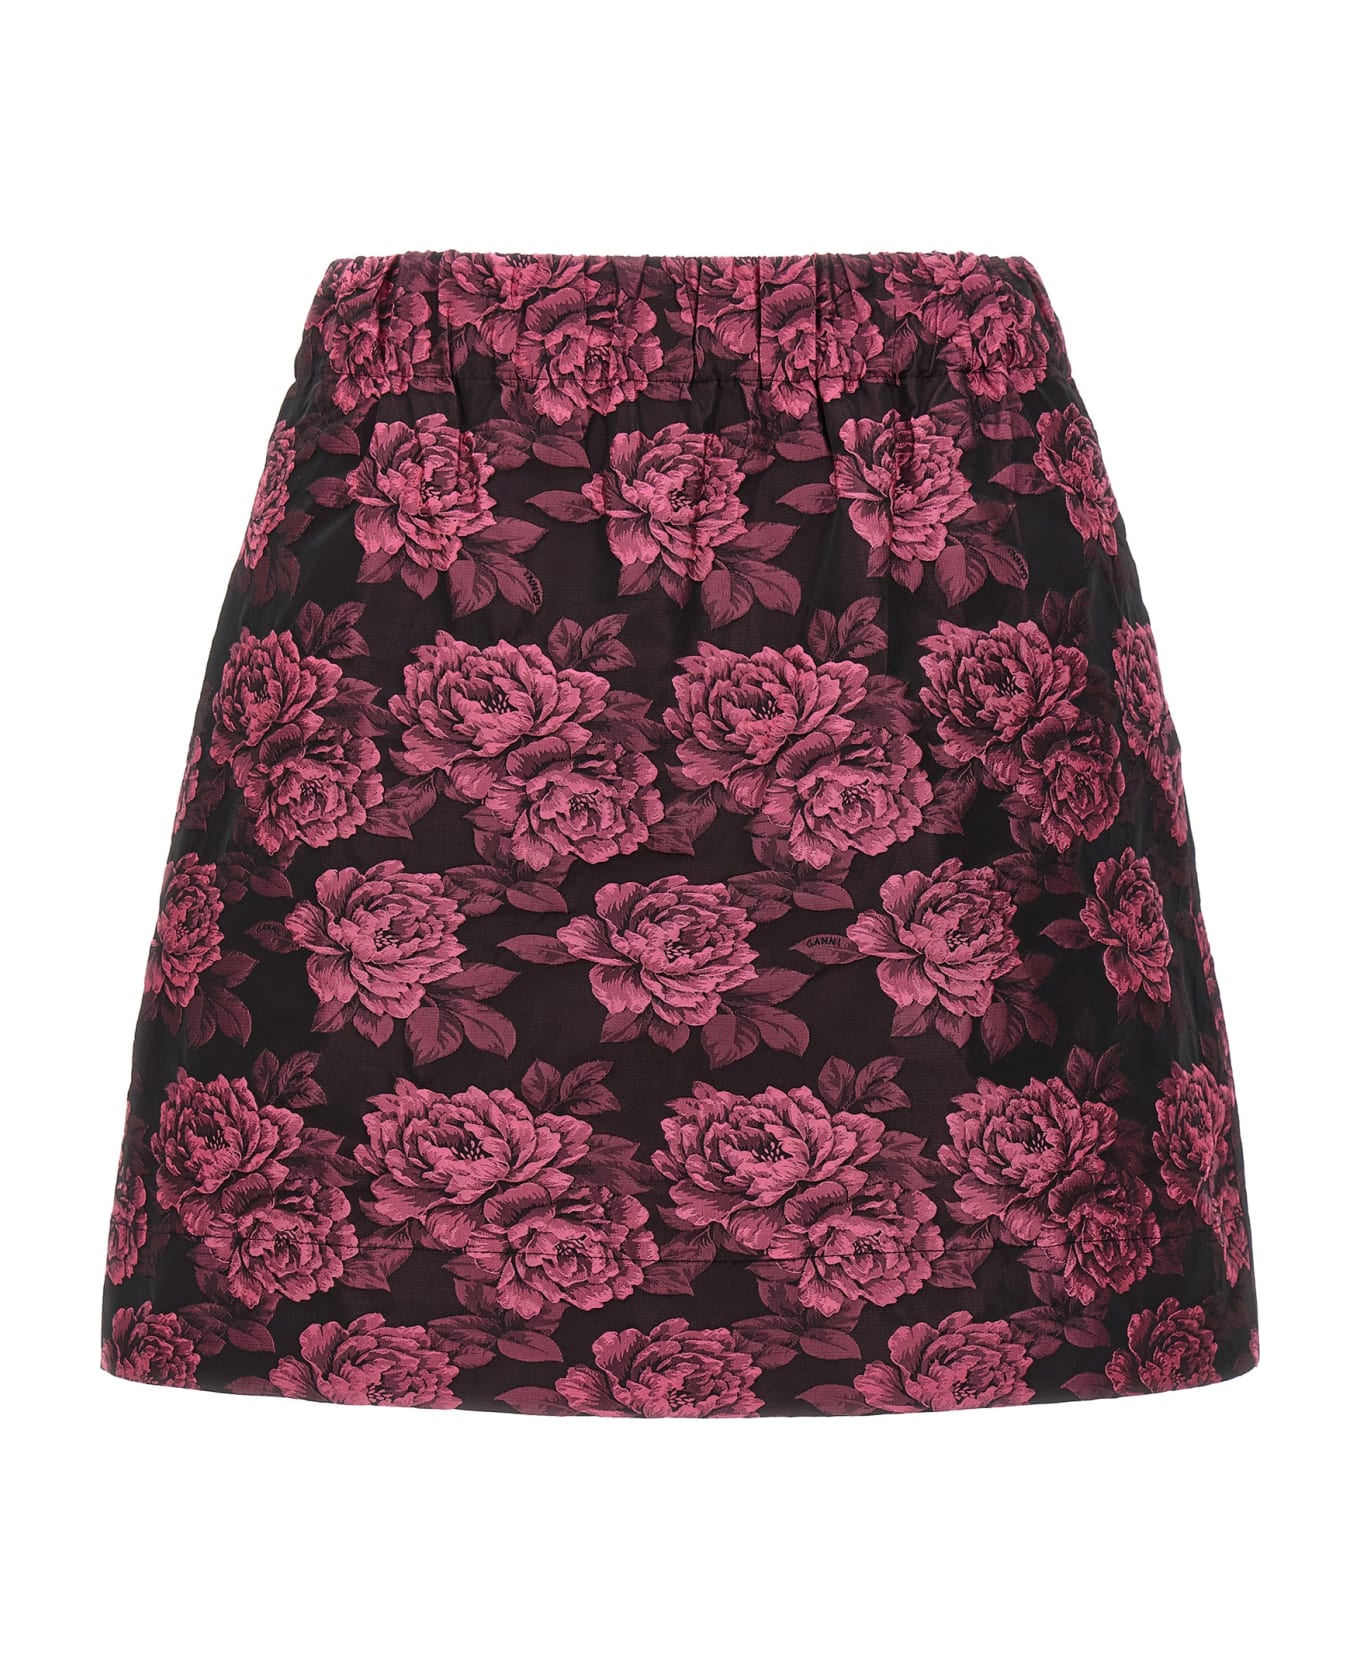 Ganni Floral Jacquard Skirt - Fuchsia スカート